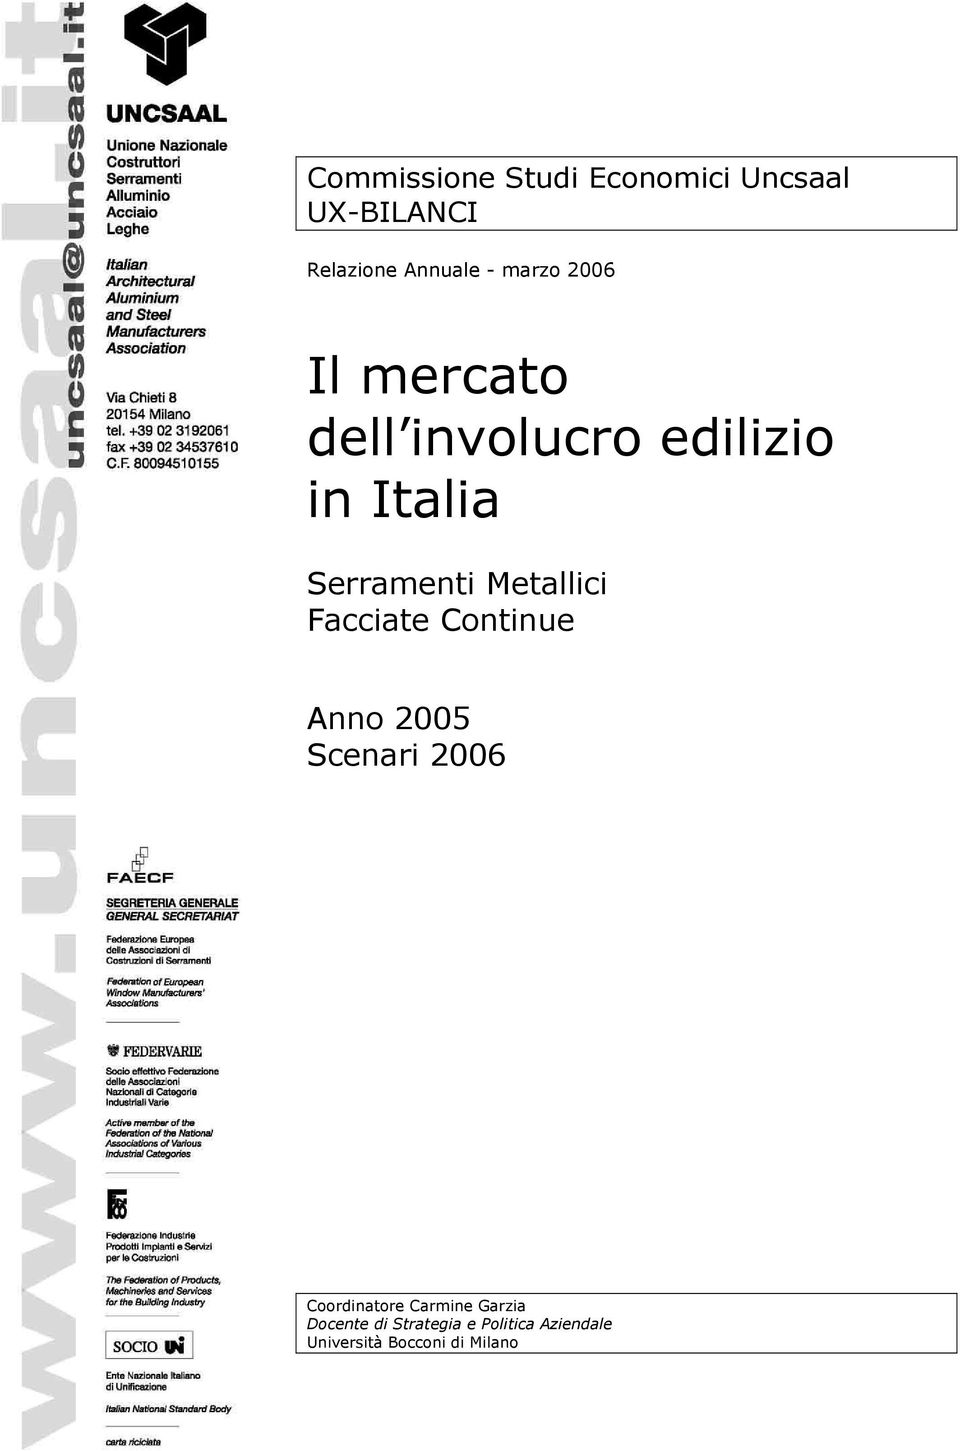 Metallici Facciate Continue Anno 2005 Scenari 2006 Coordinatore